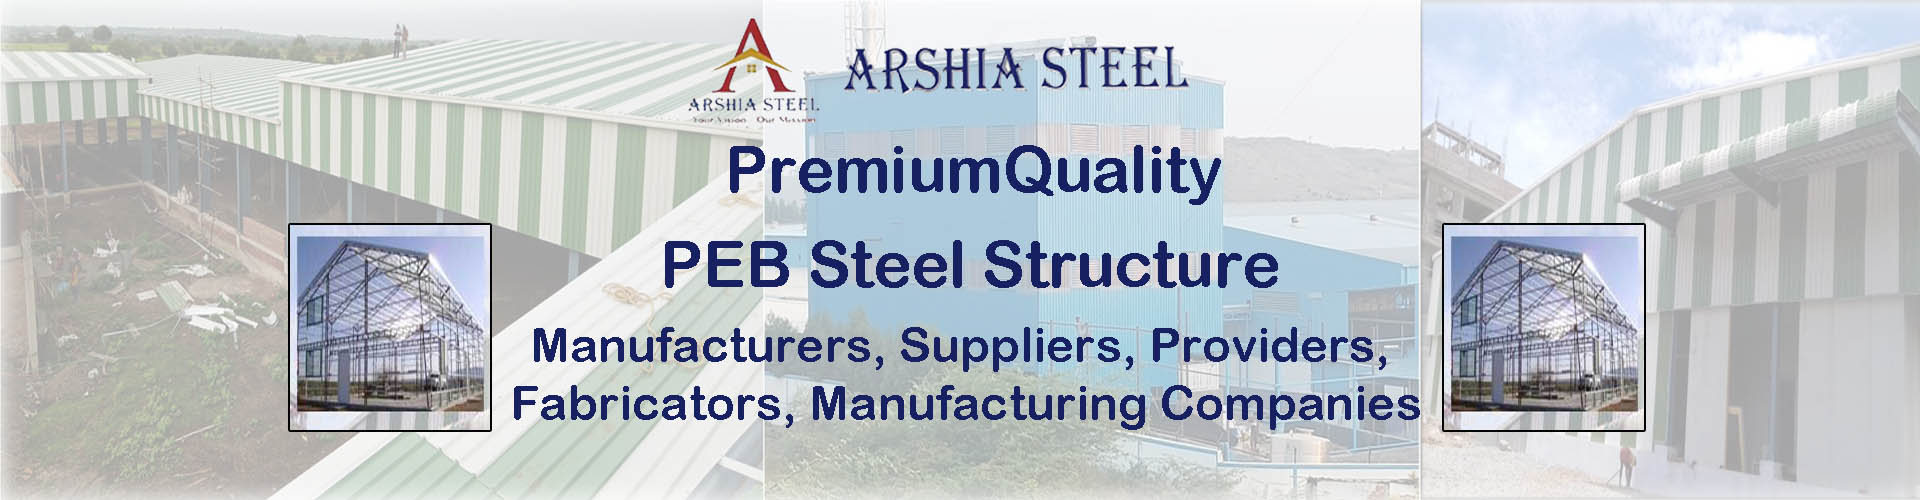 PEB Steel Structure